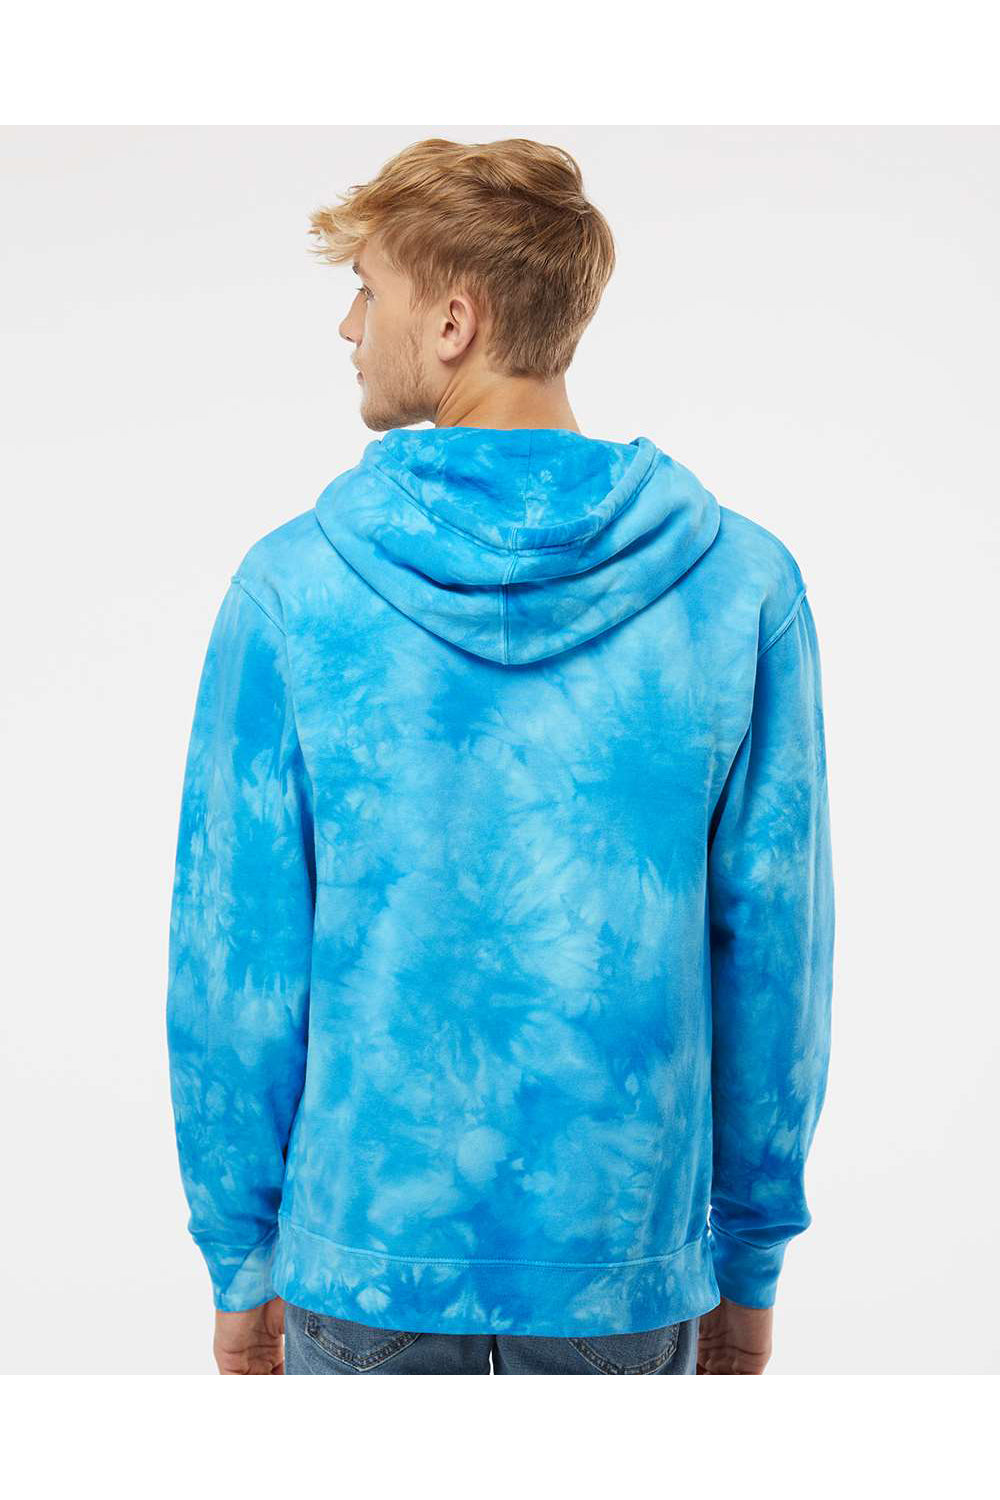 Independent Trading Co. PRM4500TD Mens Tie-Dye Hooded Sweatshirt Hoodie Aqua Blue Model Back